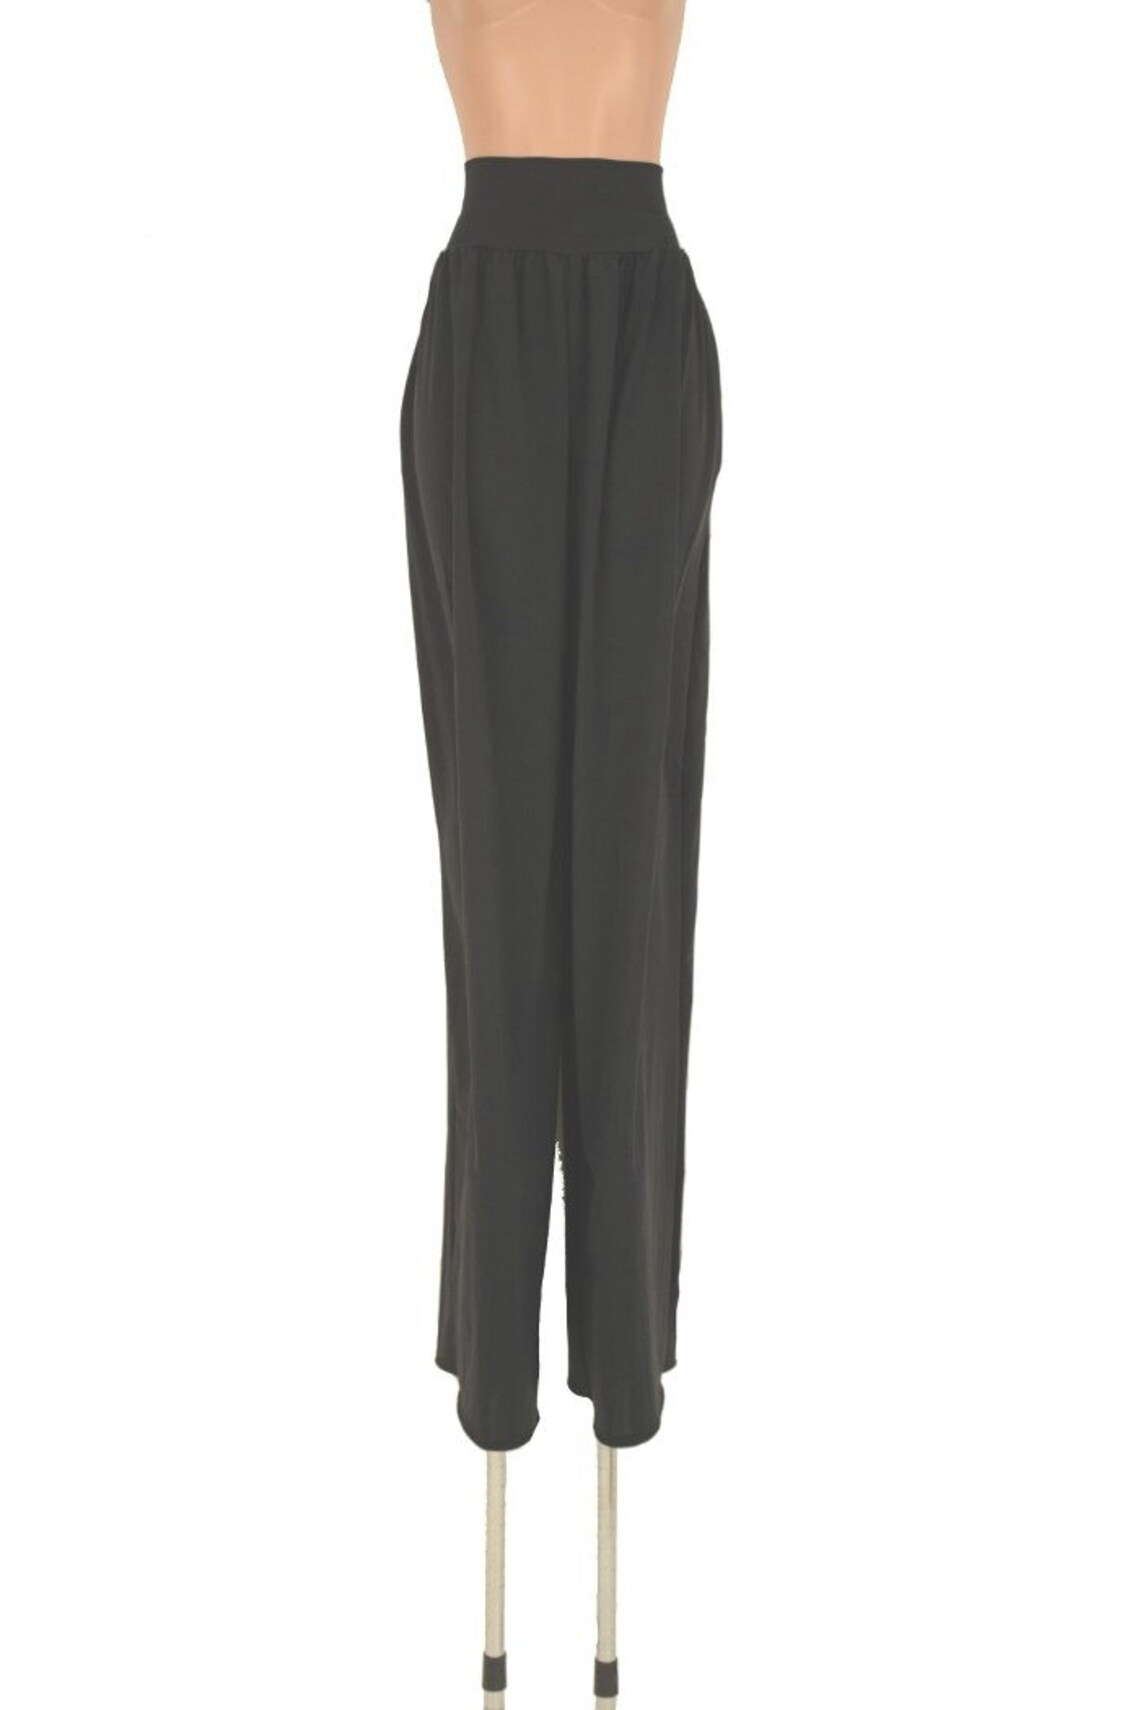 Trouser Style Stilt Pants in Smooth & Sleek Black Spandex - Etsy